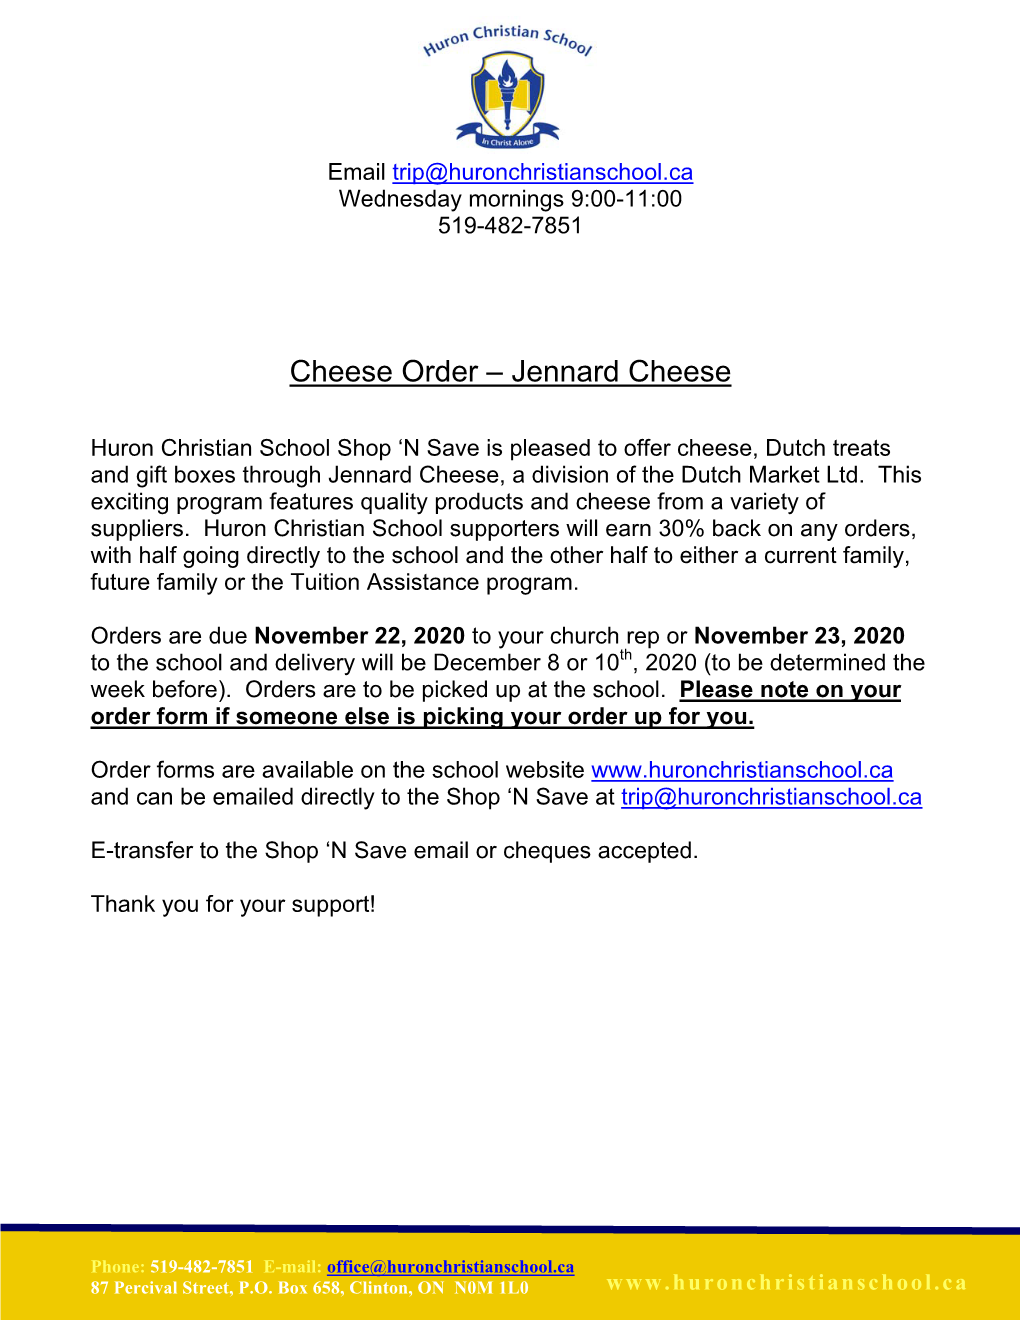 Jennard Cheese